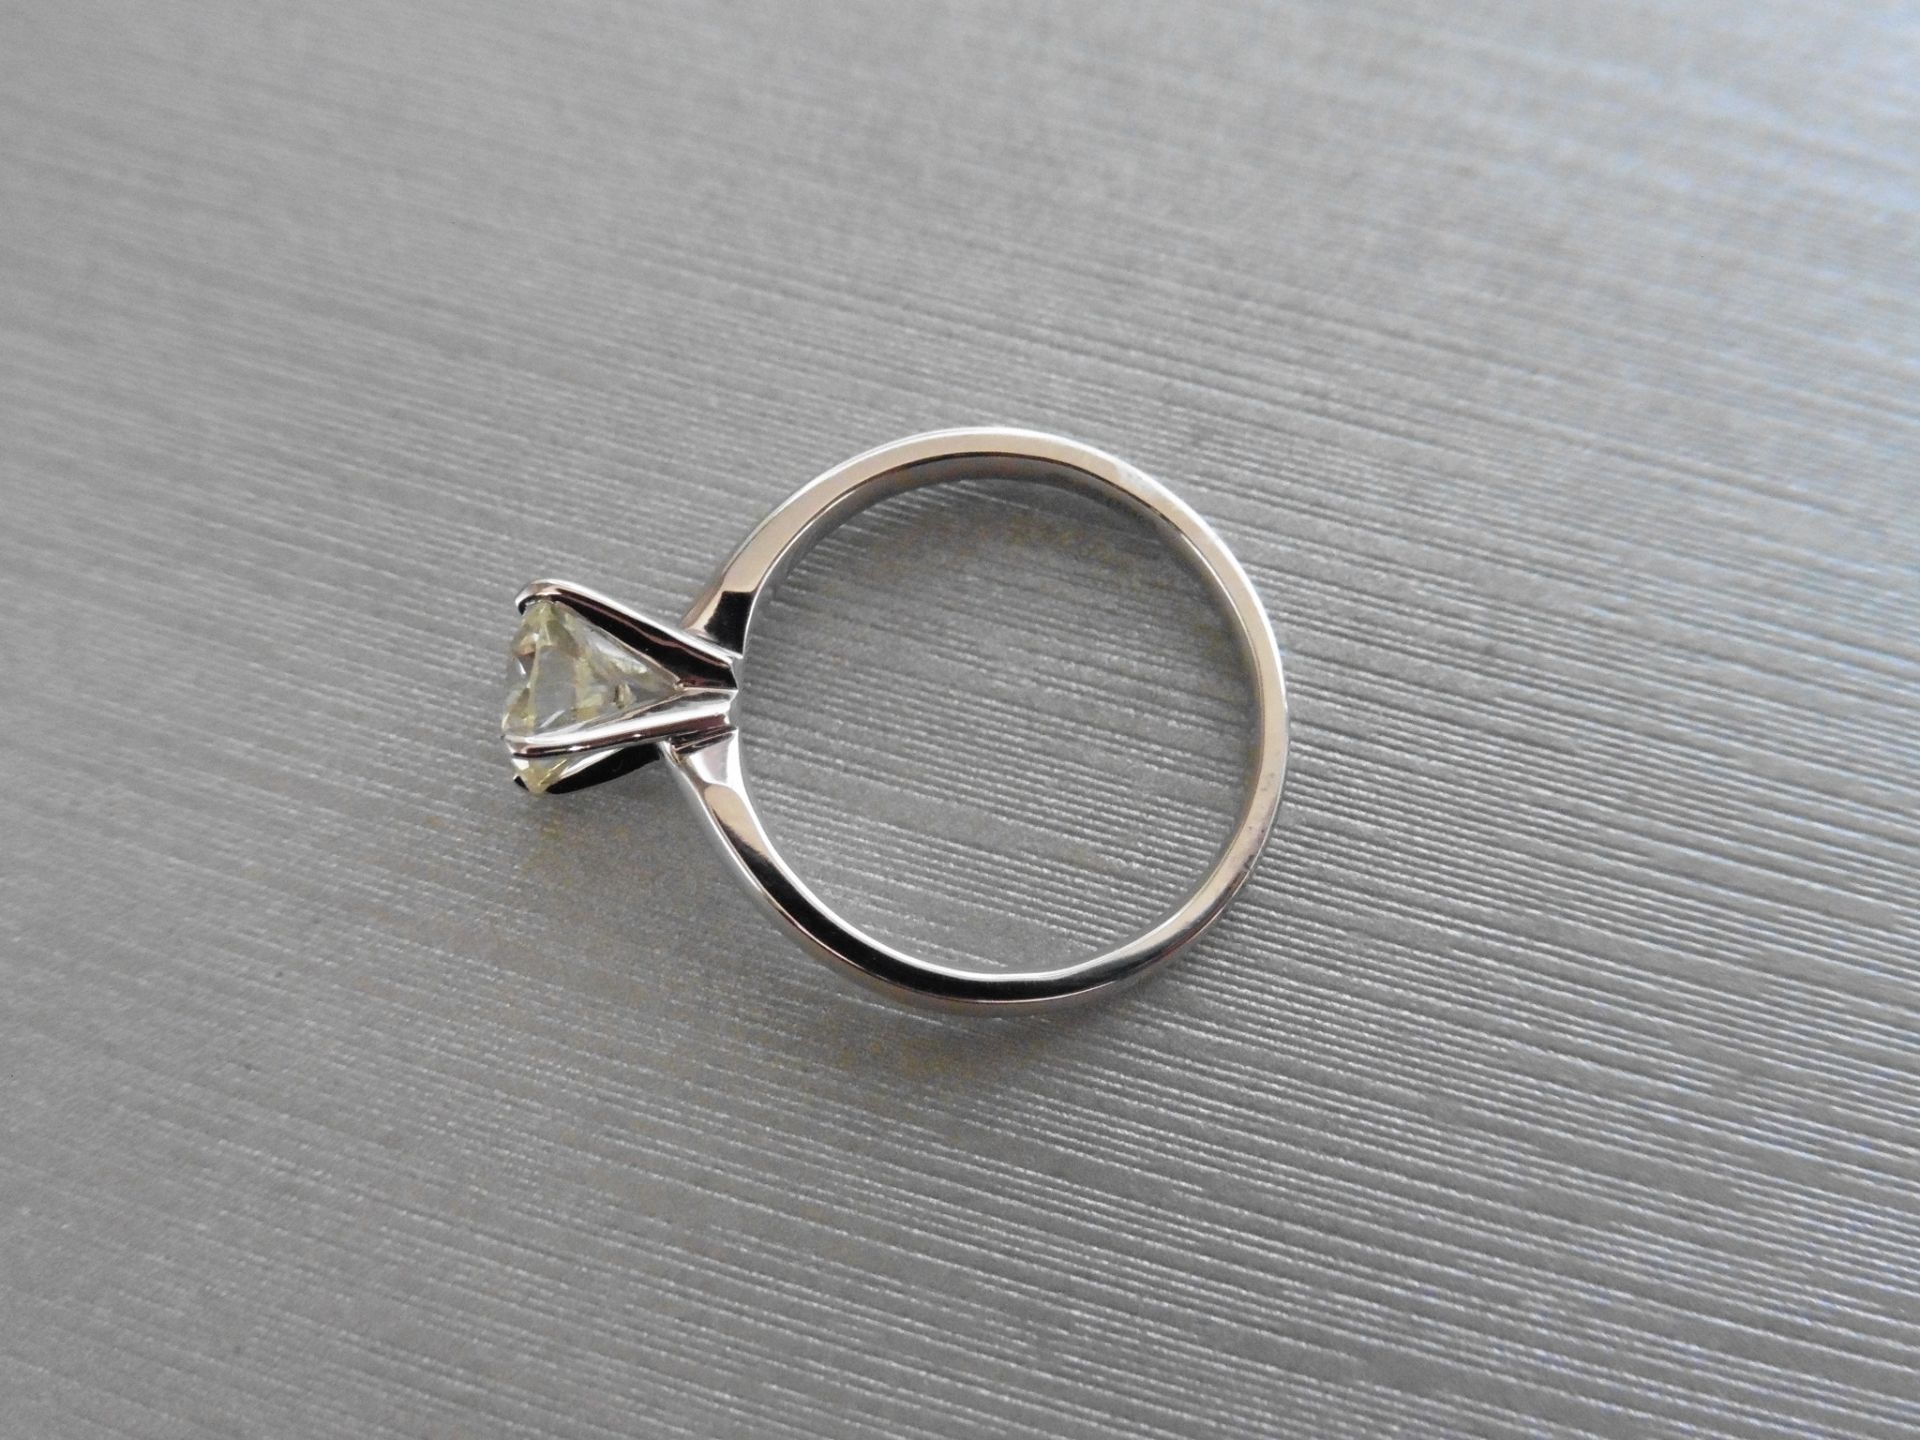 1.06ct brilliant cut diamond ring,1.06ct j colour si2 clarity(clarity enhanced),platinum 4 claw - Image 2 of 3